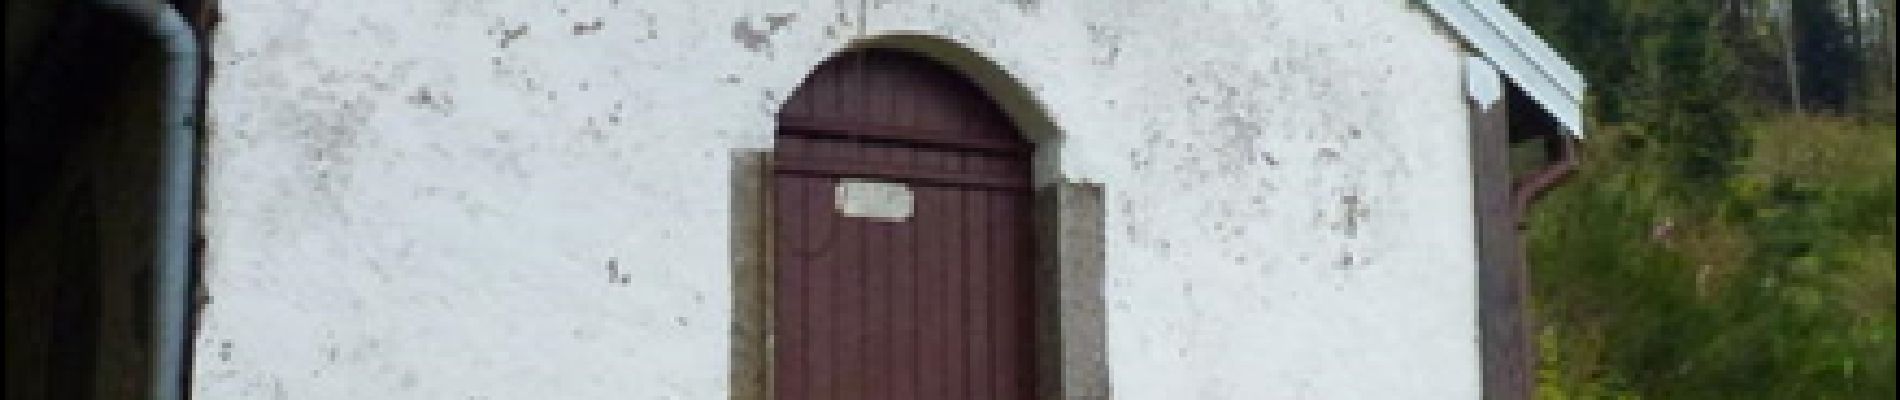 POI Servance-Miellin - chapelle St blaise - Photo